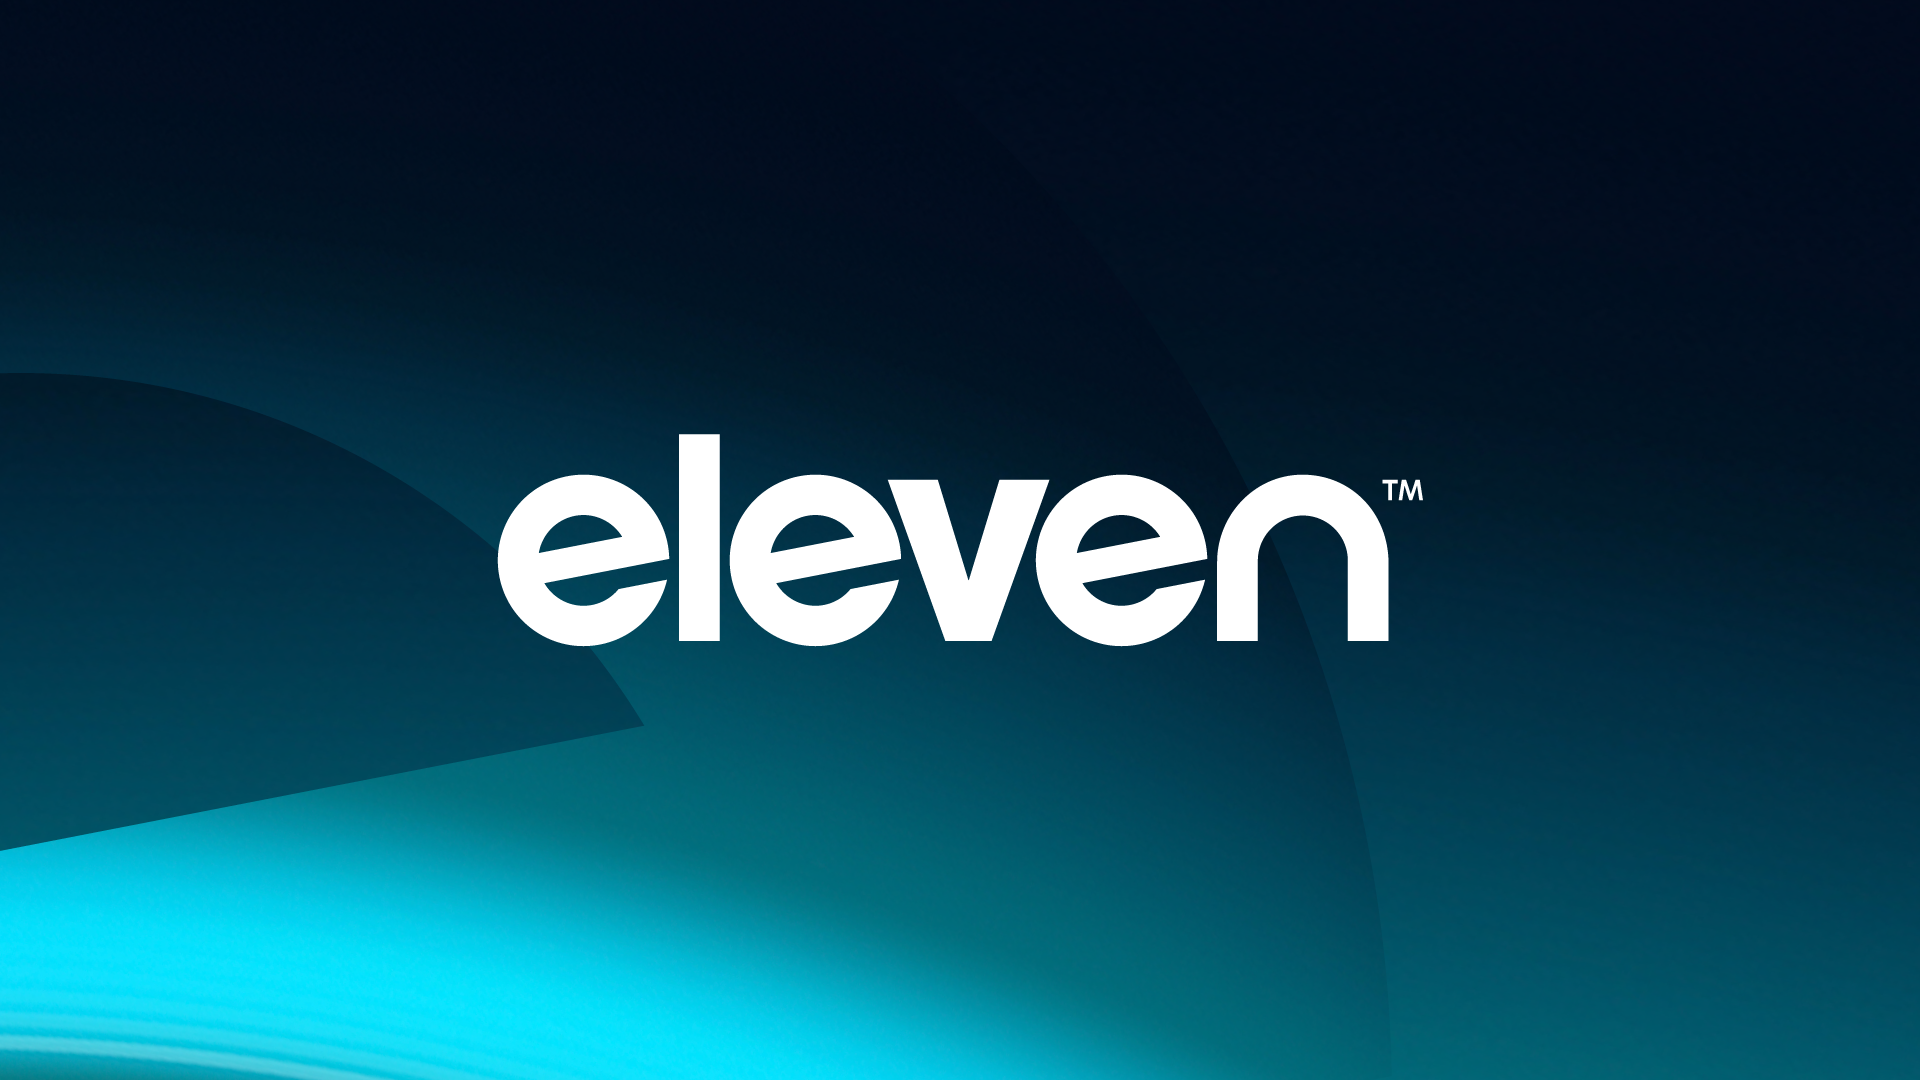 eleven brand logo on blue background